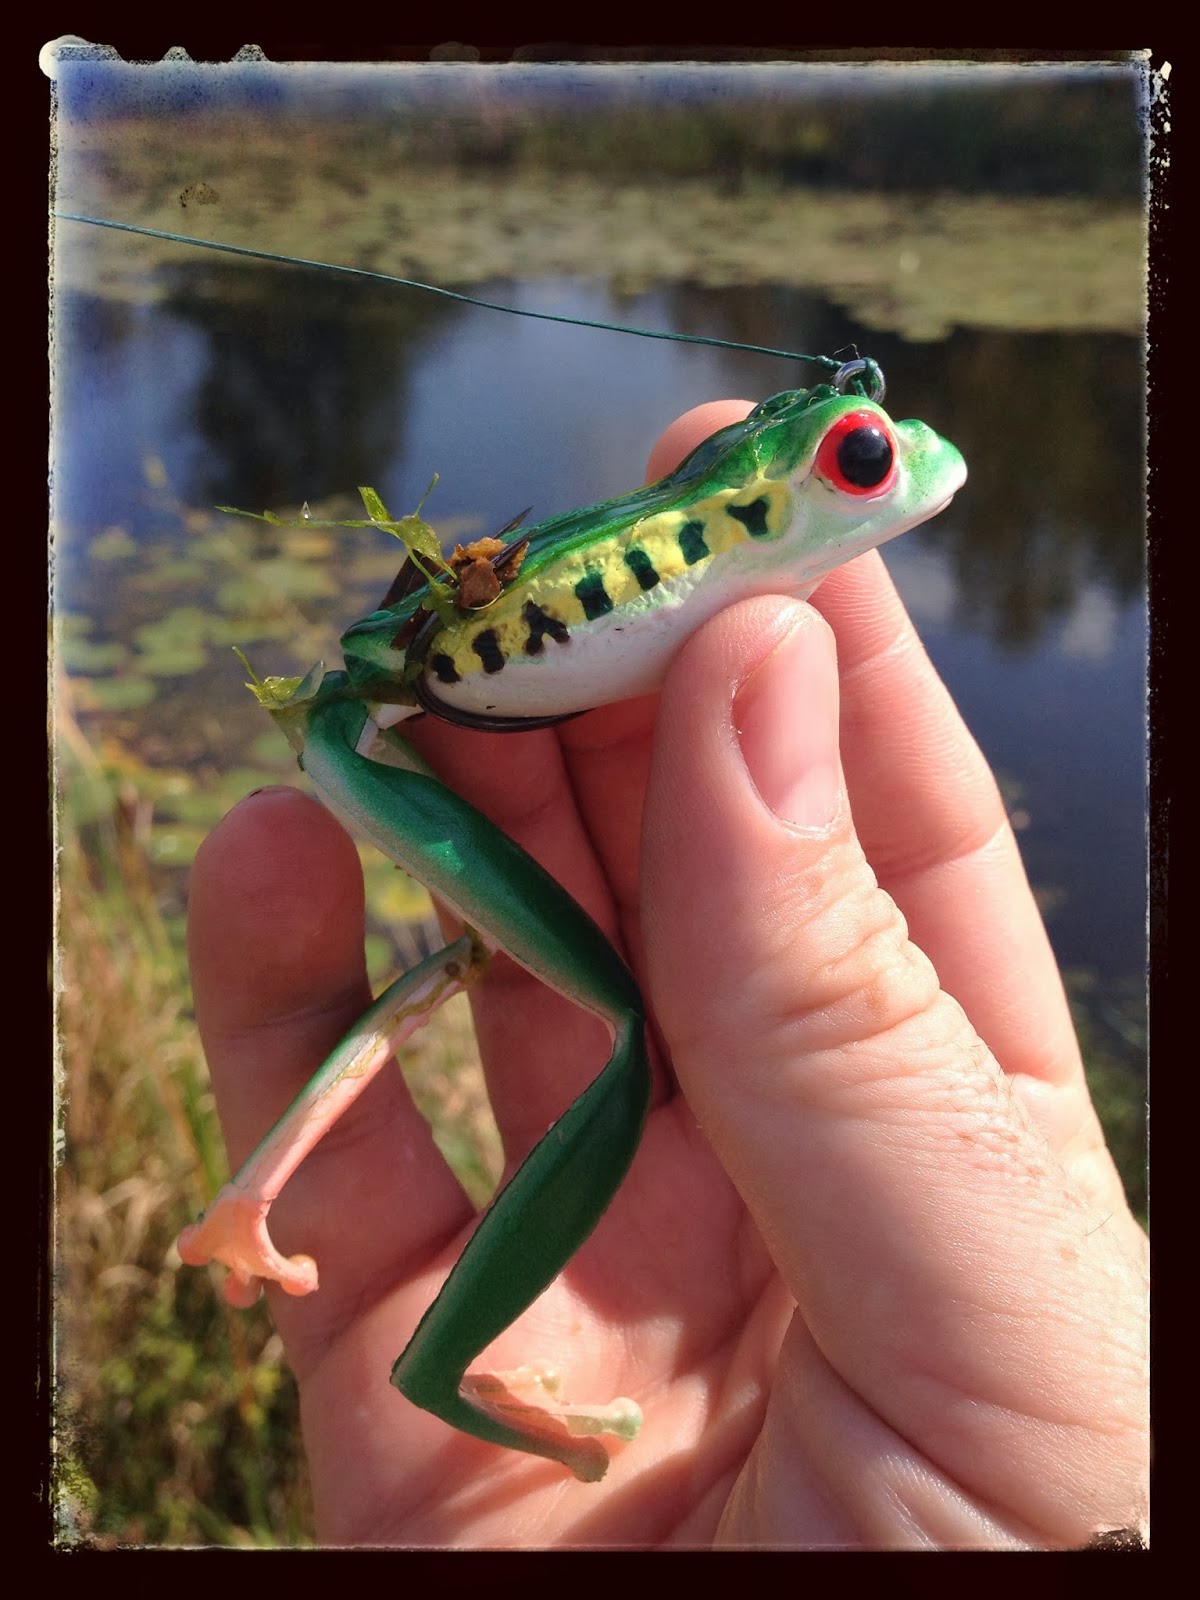 Bass Junkies Frog Pond: Kahara Diving Frog Review